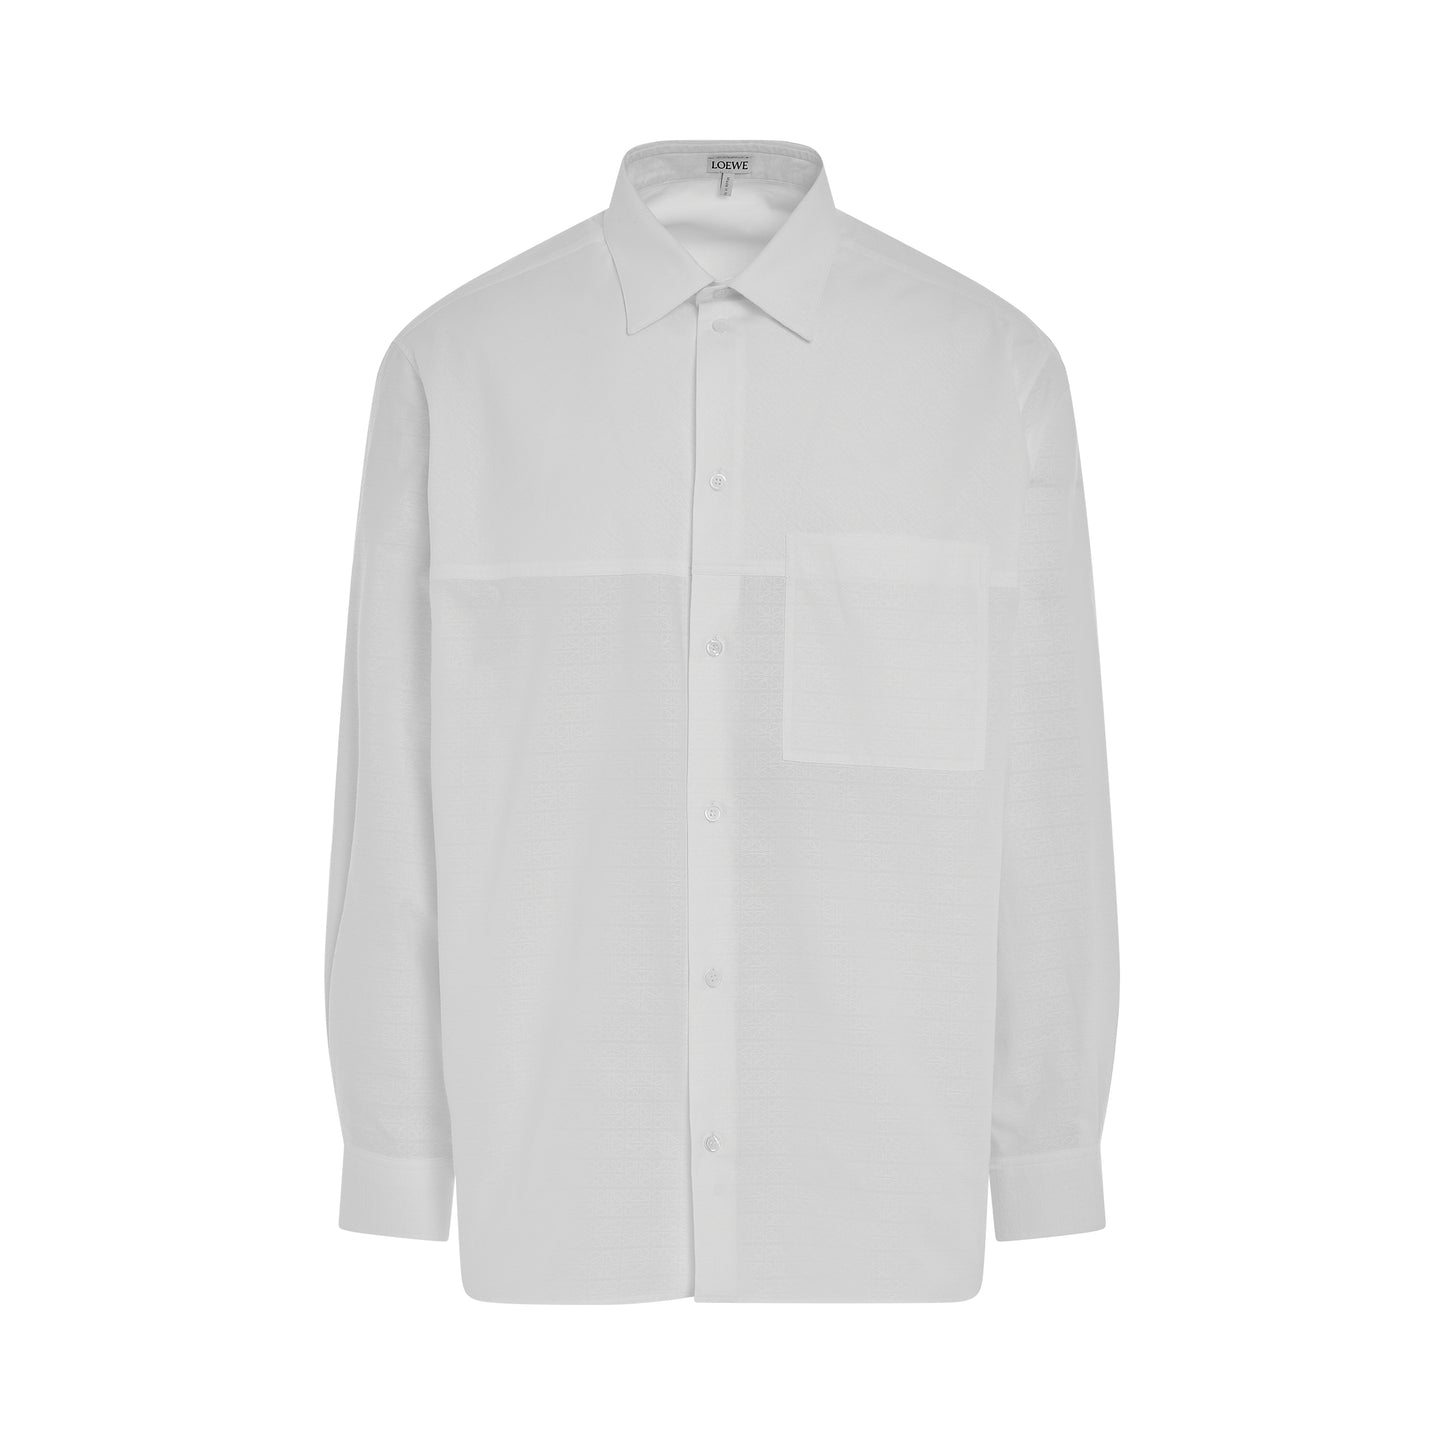 Anagram Jacquard Shirt in White